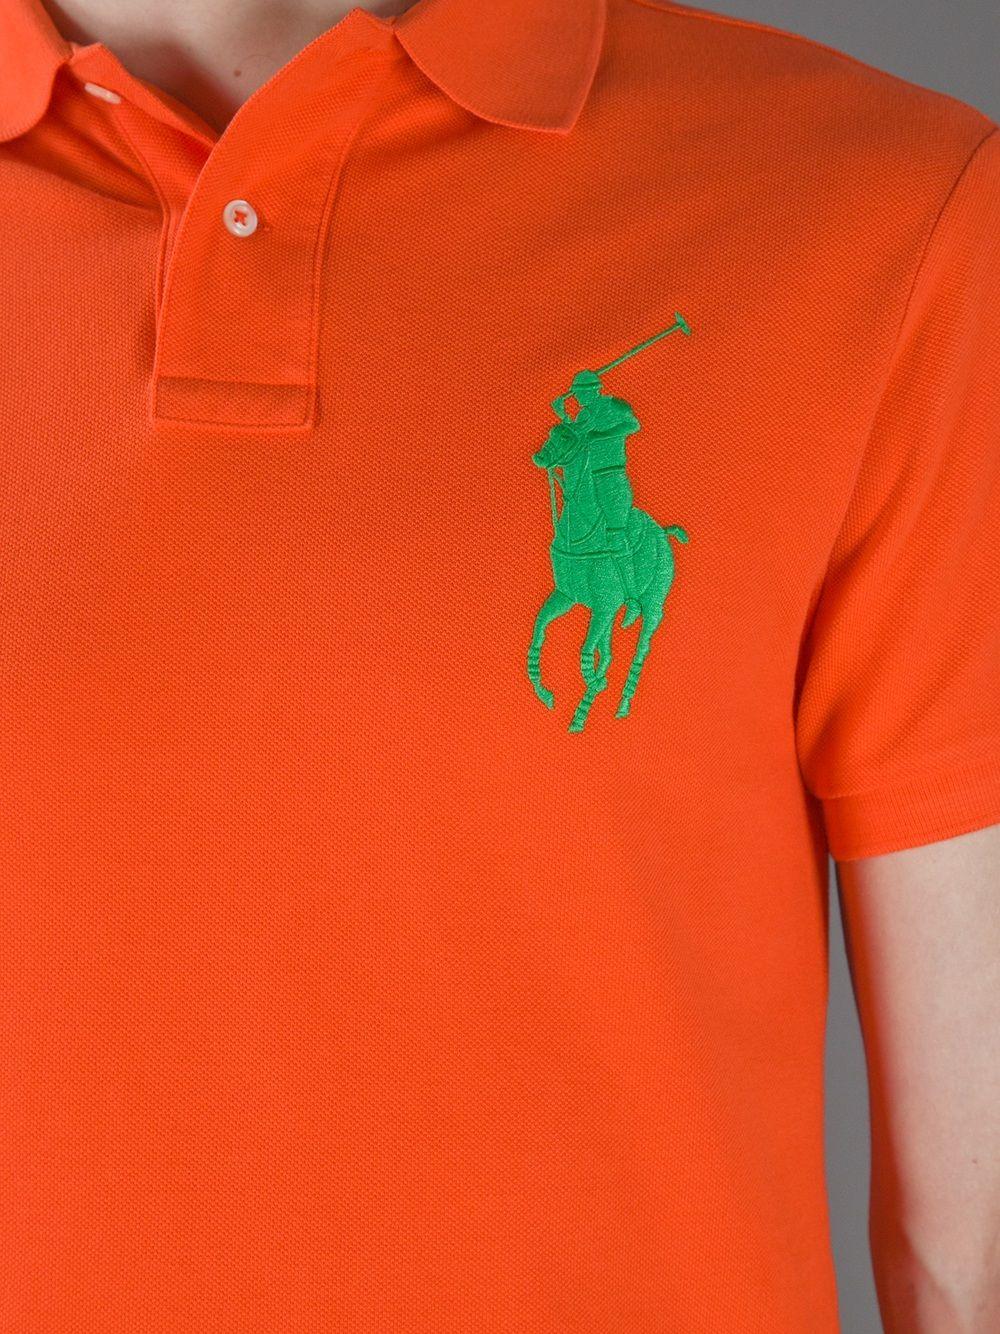 Orange Polo Logo - Polo Ralph Lauren Logo Polo Shirt in Orange for Men - Lyst